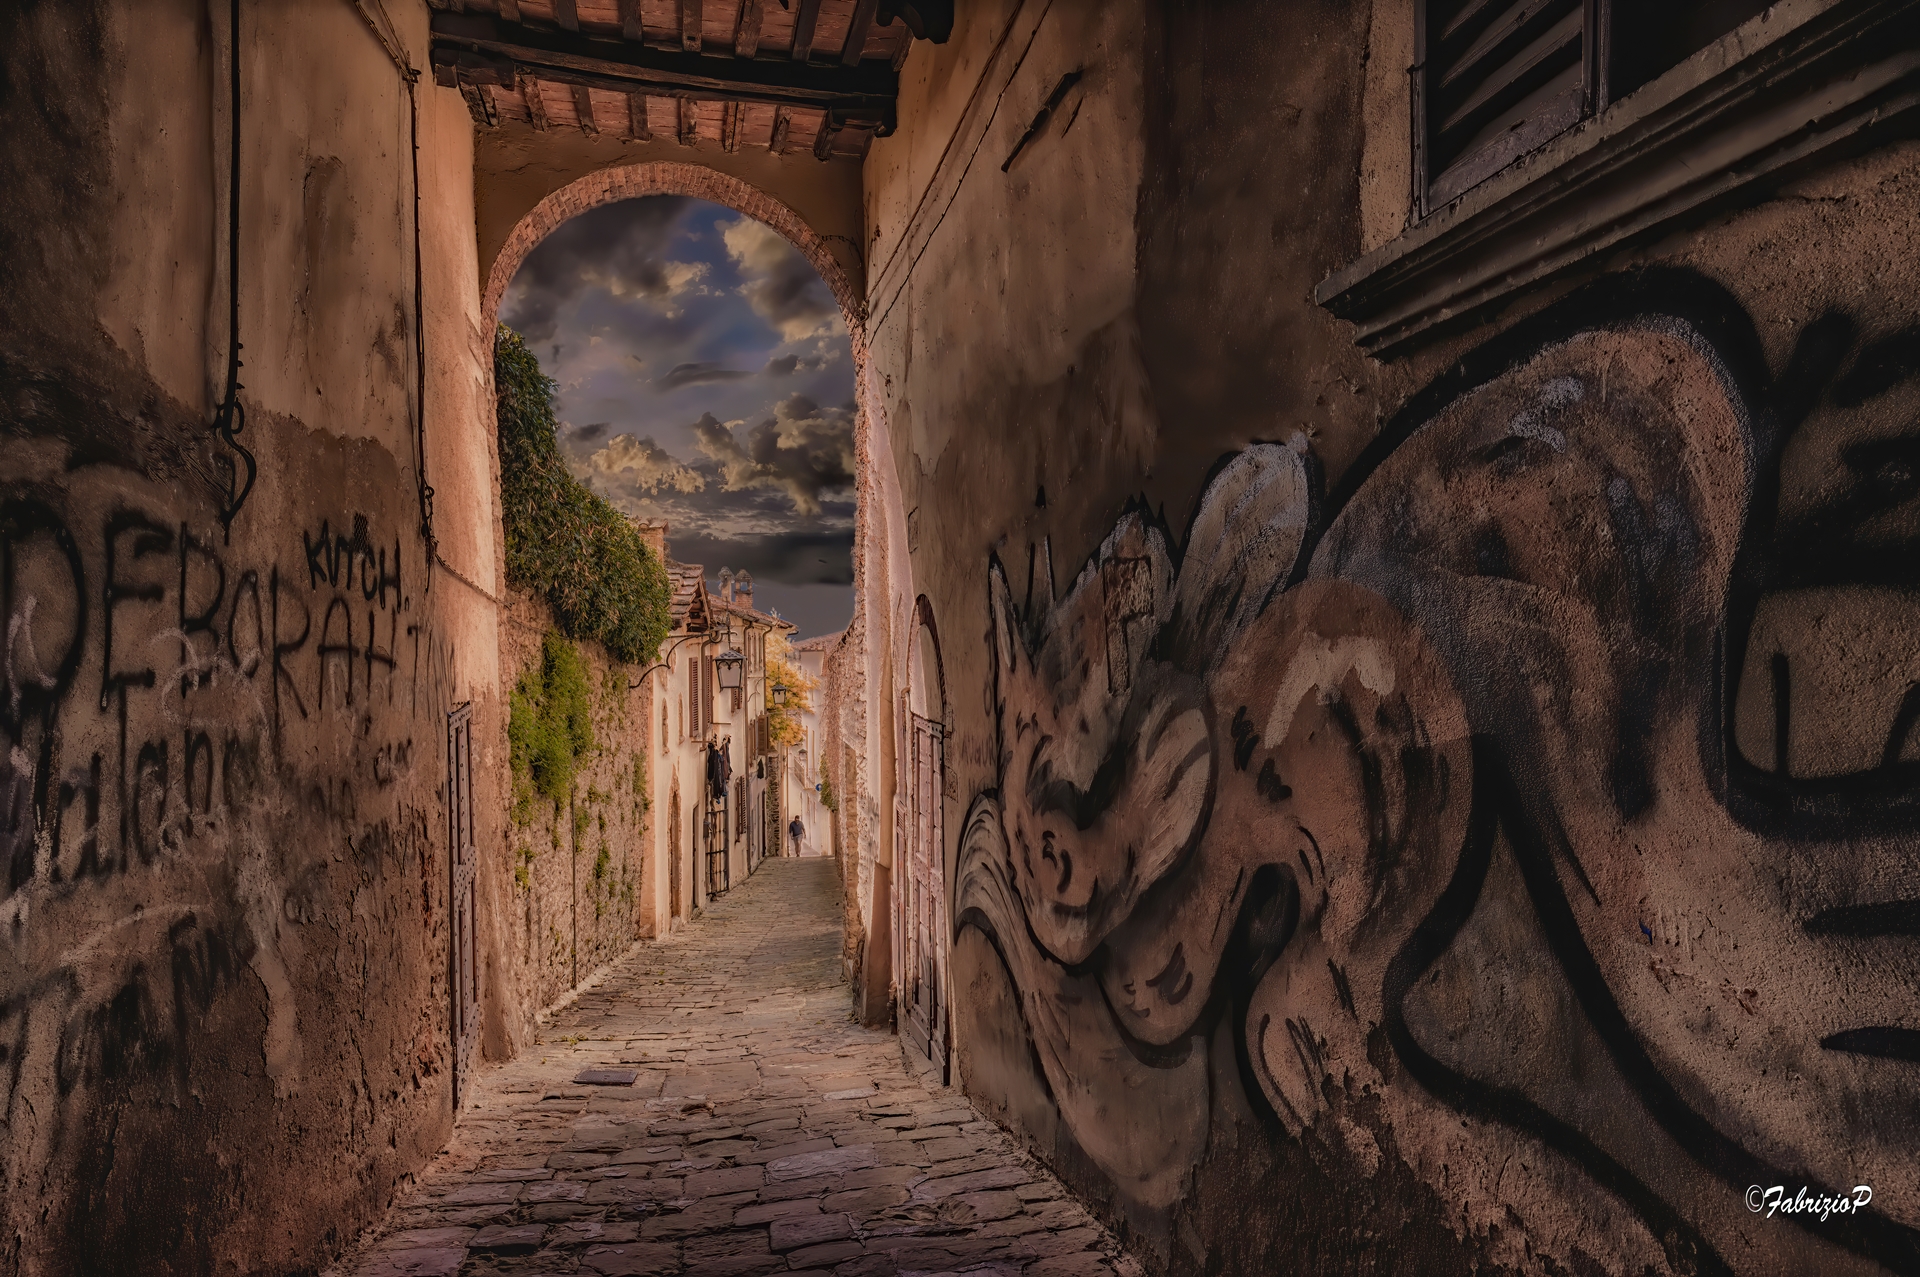 A particular alley ...